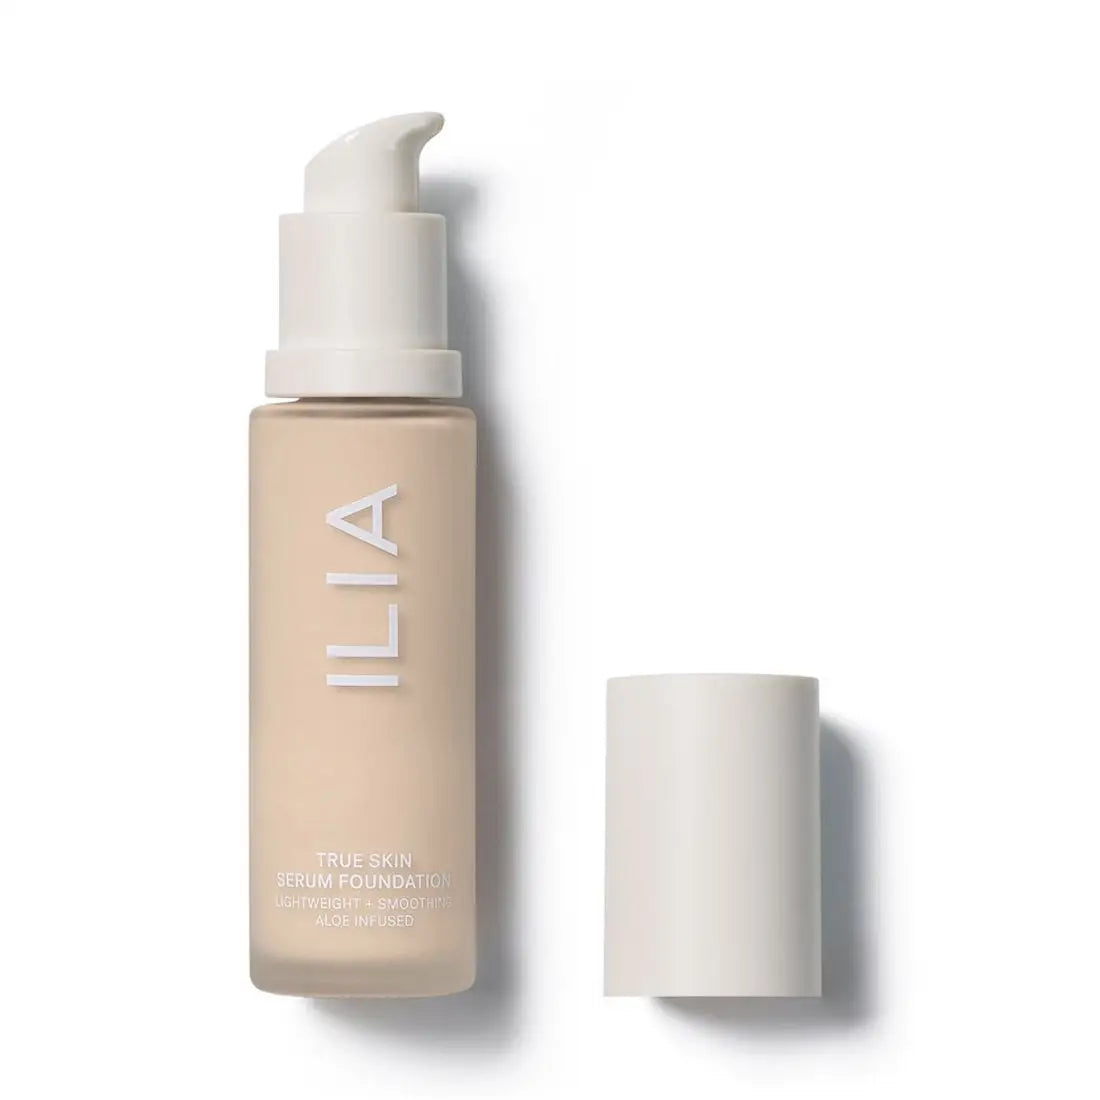 Ilia Beauty True Skin Serum Foundation 30g - Free Shipping 